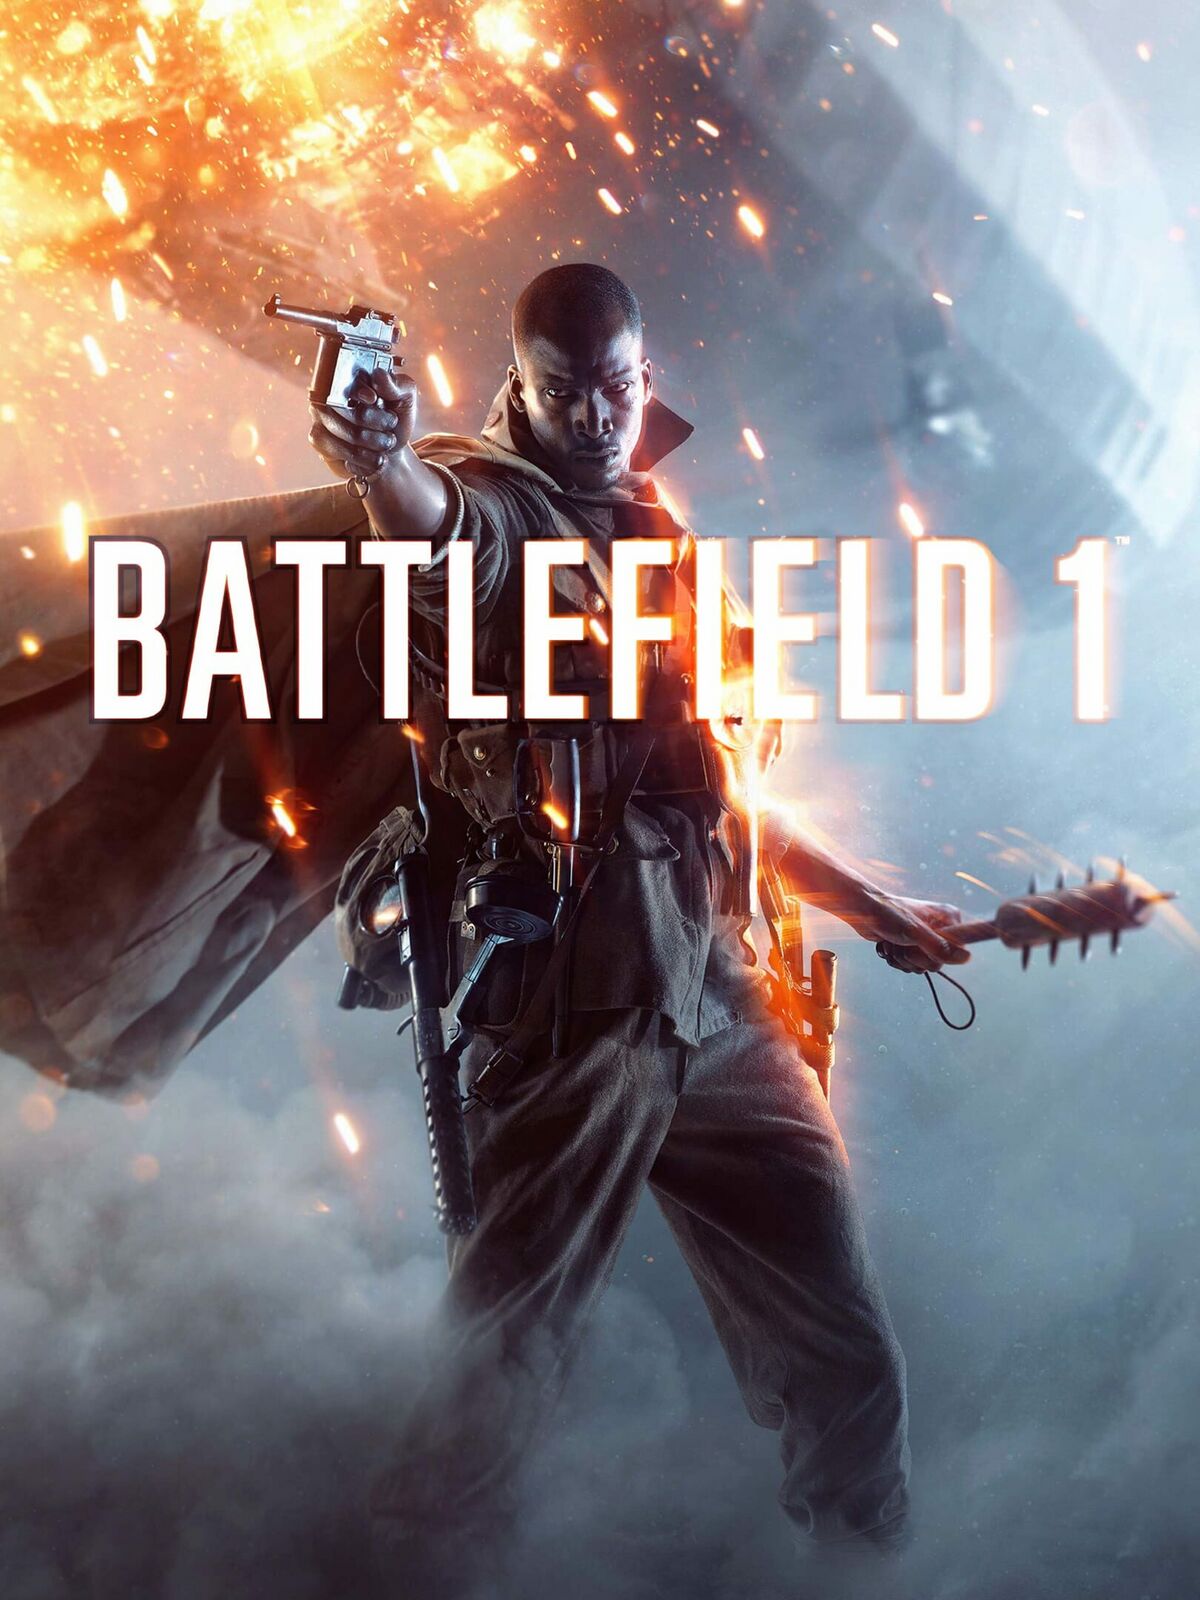 Battlefield Play4Free - Wikipedia